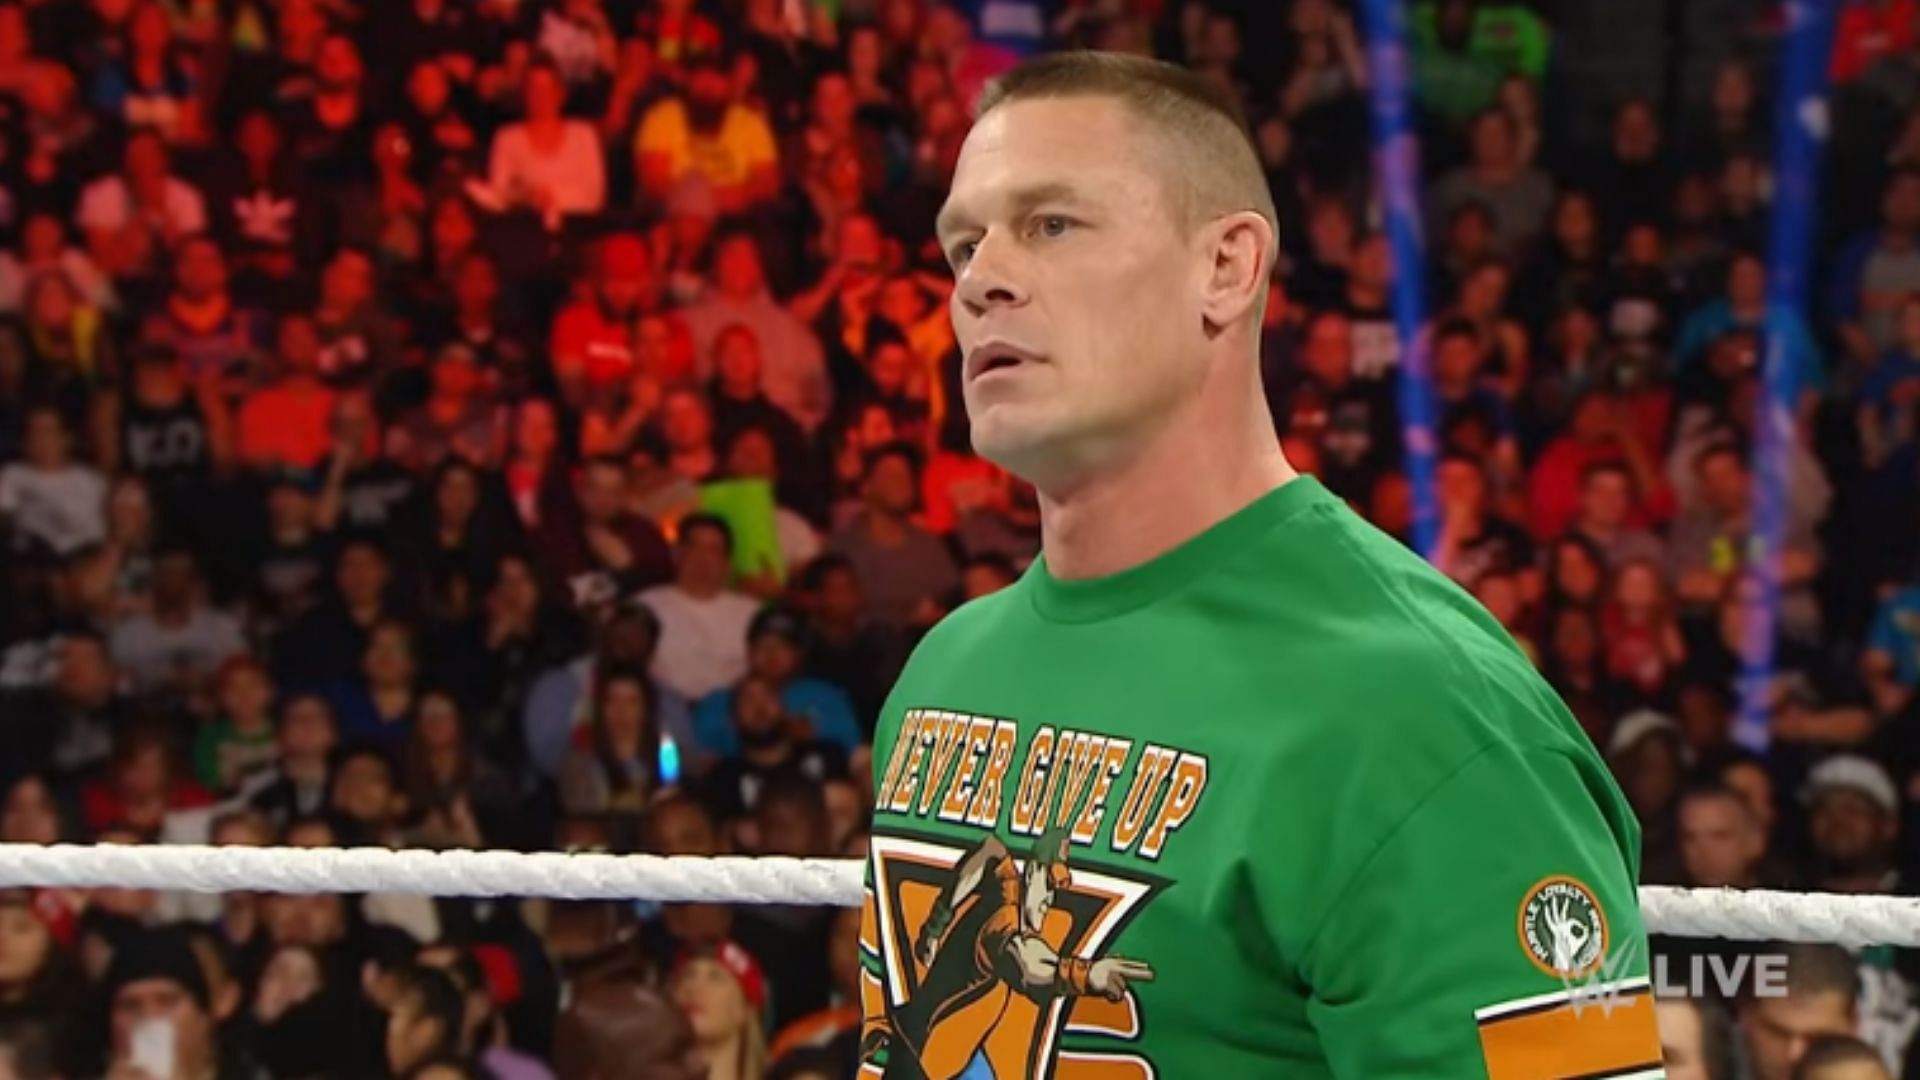 John Cena received heartfelt praise from current WWE star